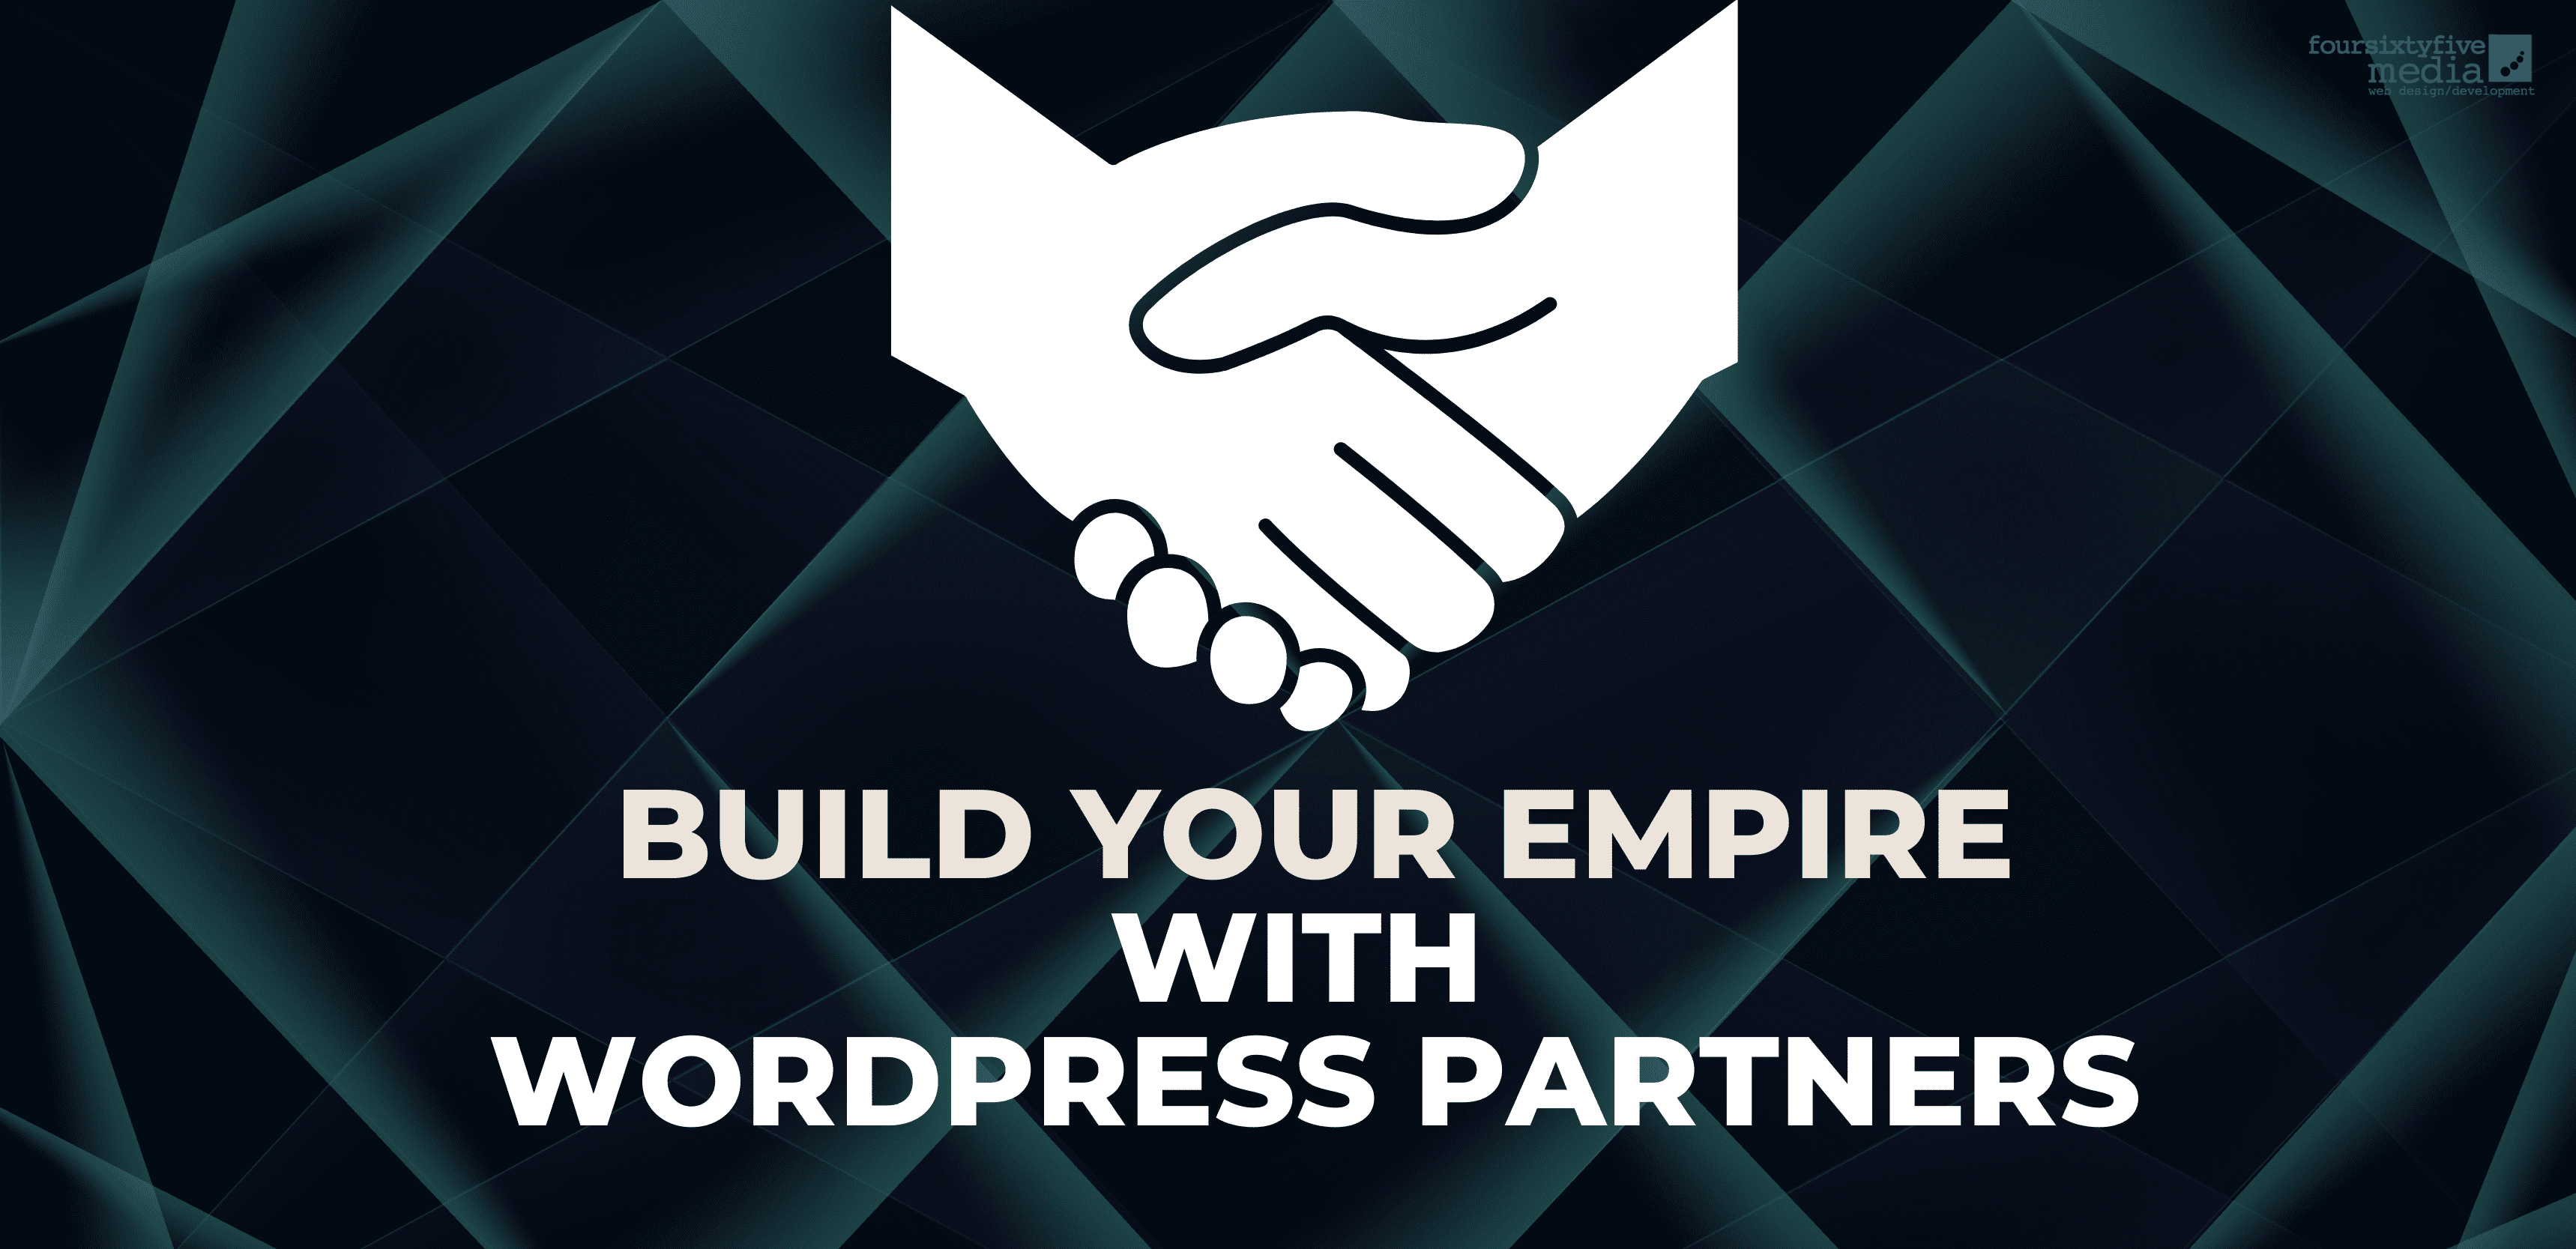 WordPress Partners